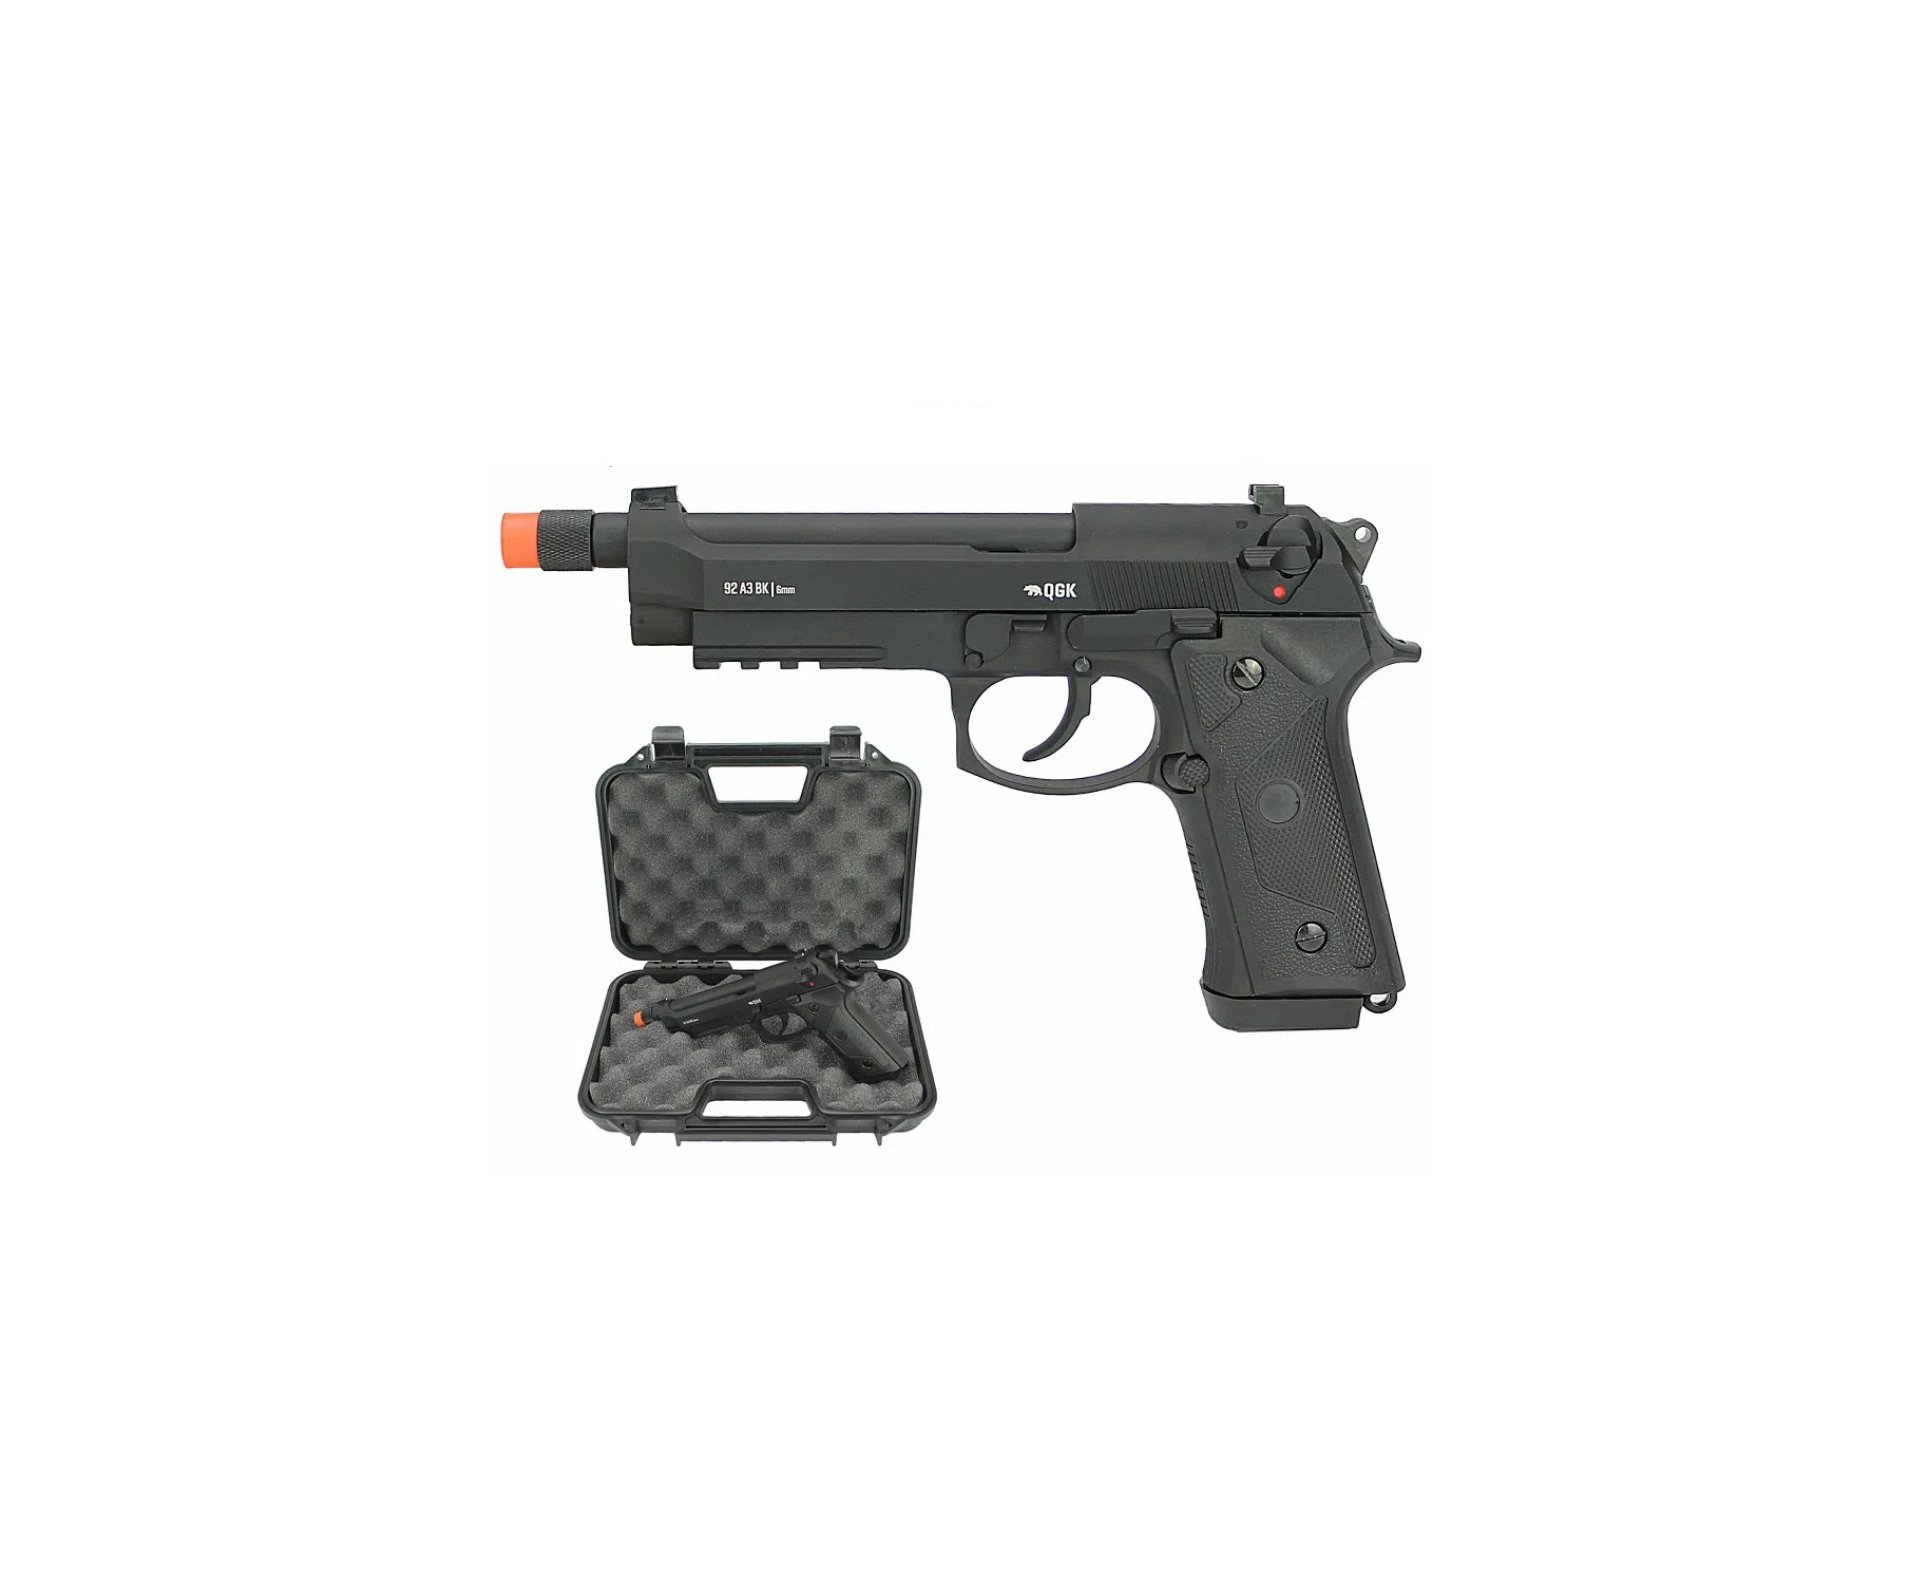 Pistola de Airsoft GBB M92 Black Full Metal Blowback 6mm QGK + Cilindro Green gas + Esferas bbs